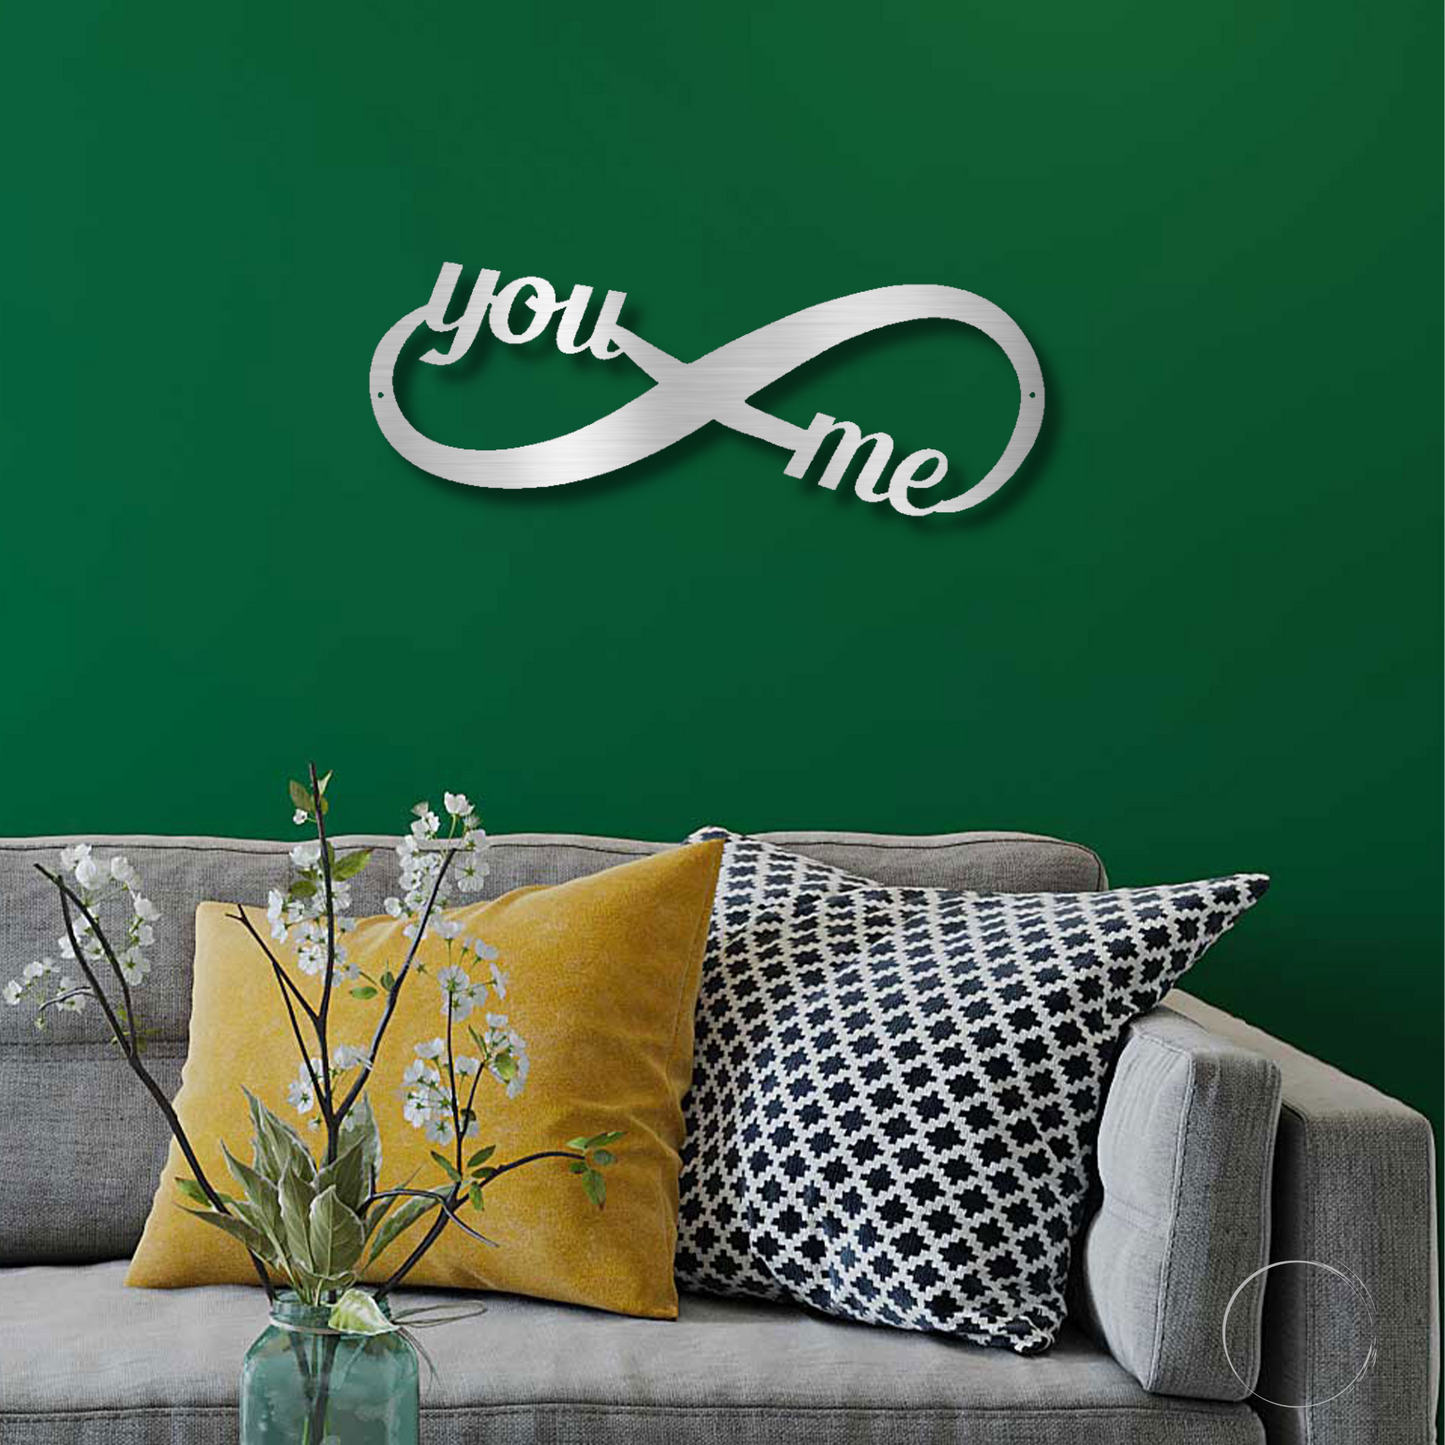 Romantic Home Decor "You & Me" Laser-Cut Infinity Metal Wall Art